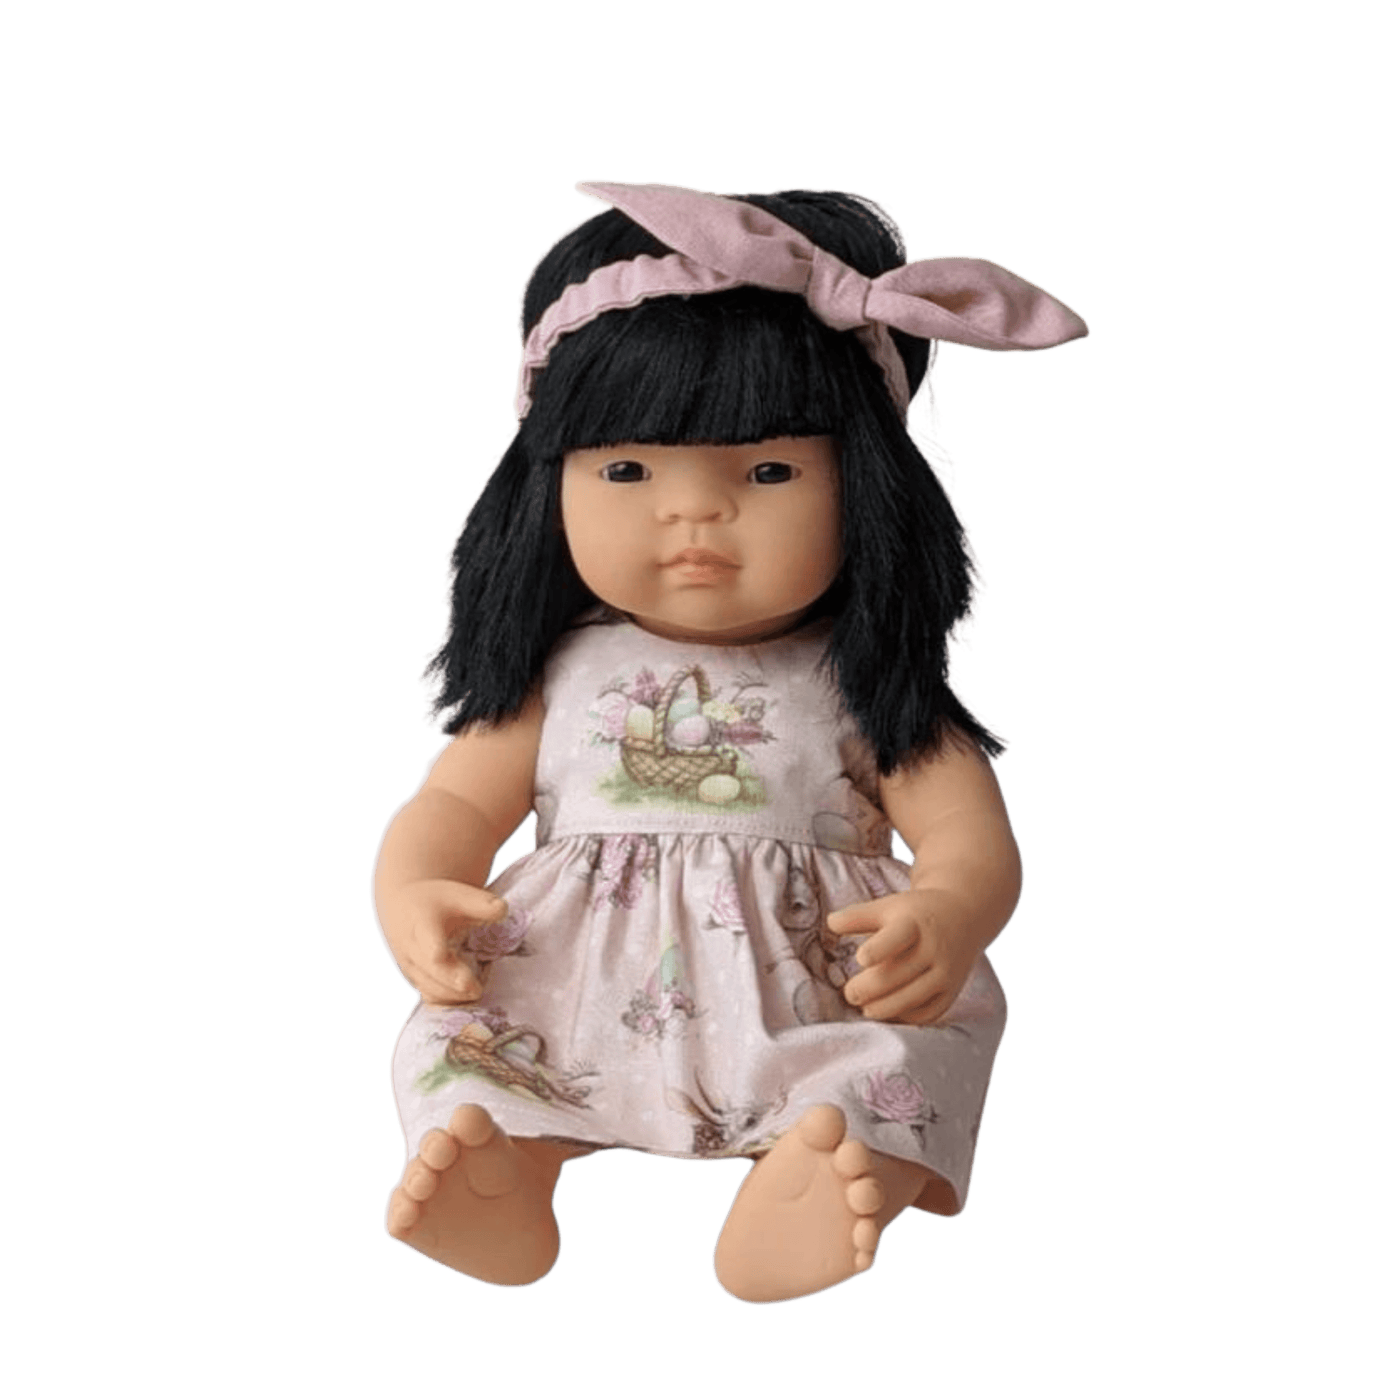 asian doll wearing pink dress and headband